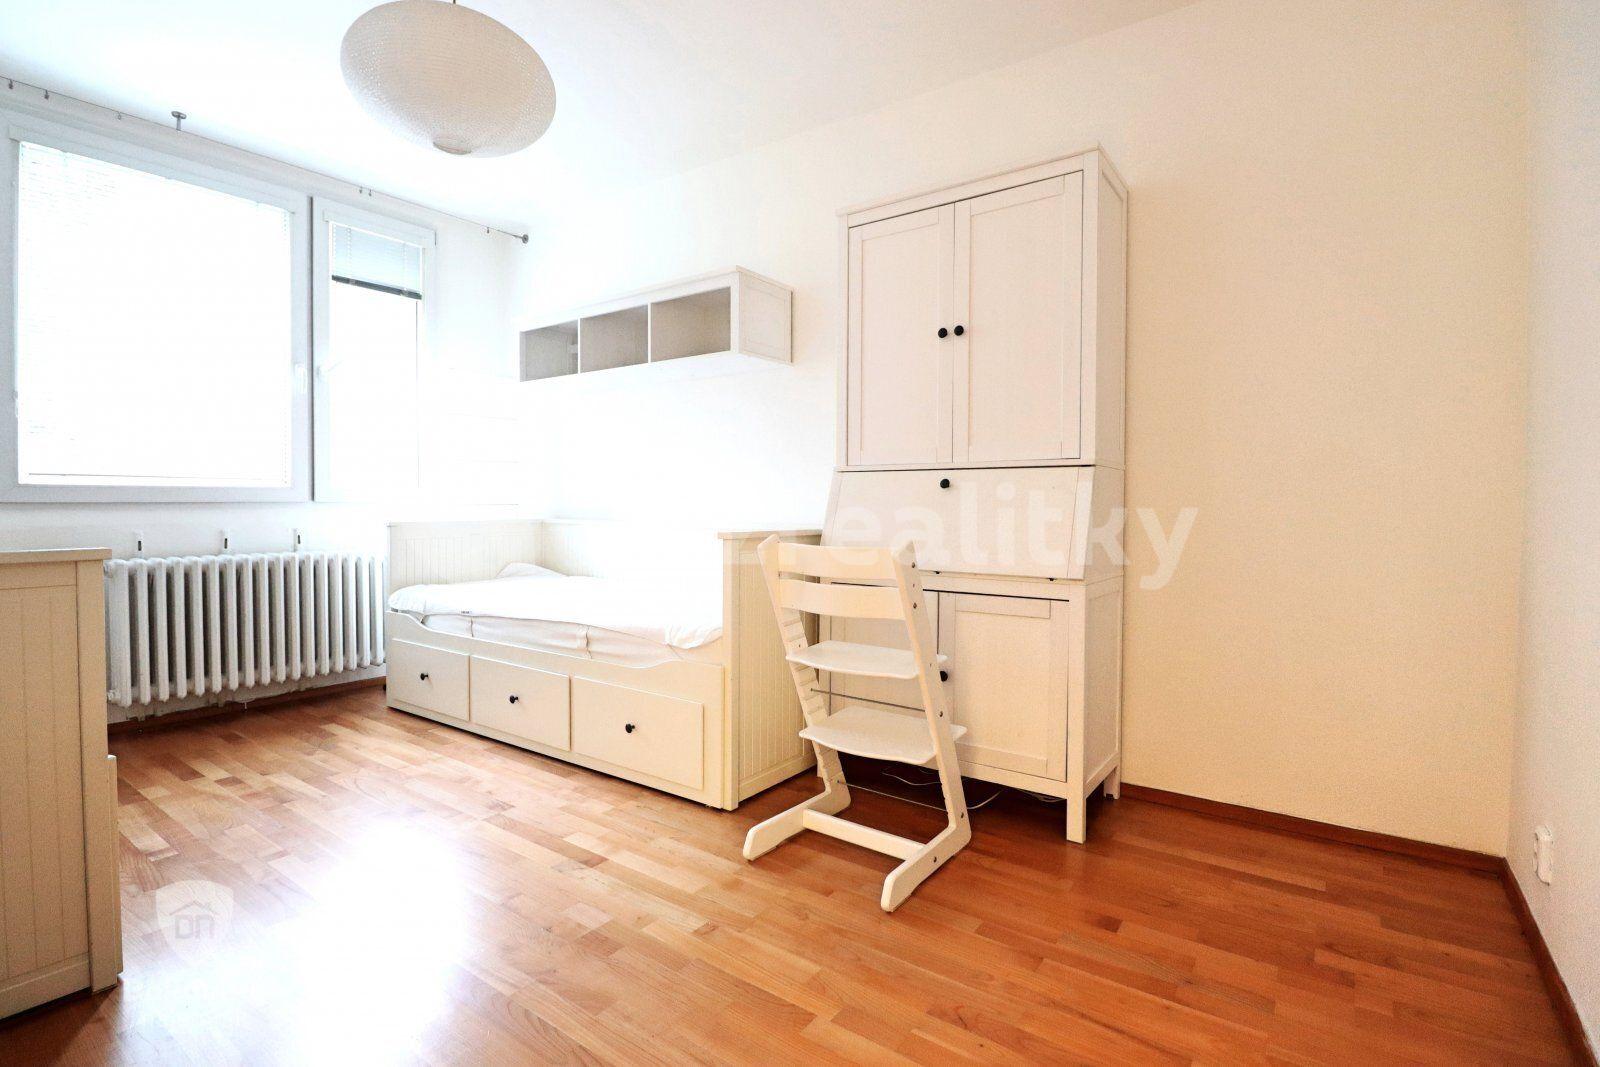 3 bedroom with open-plan kitchen flat to rent, 84 m², Na Okrouhlíku, Prague, Prague